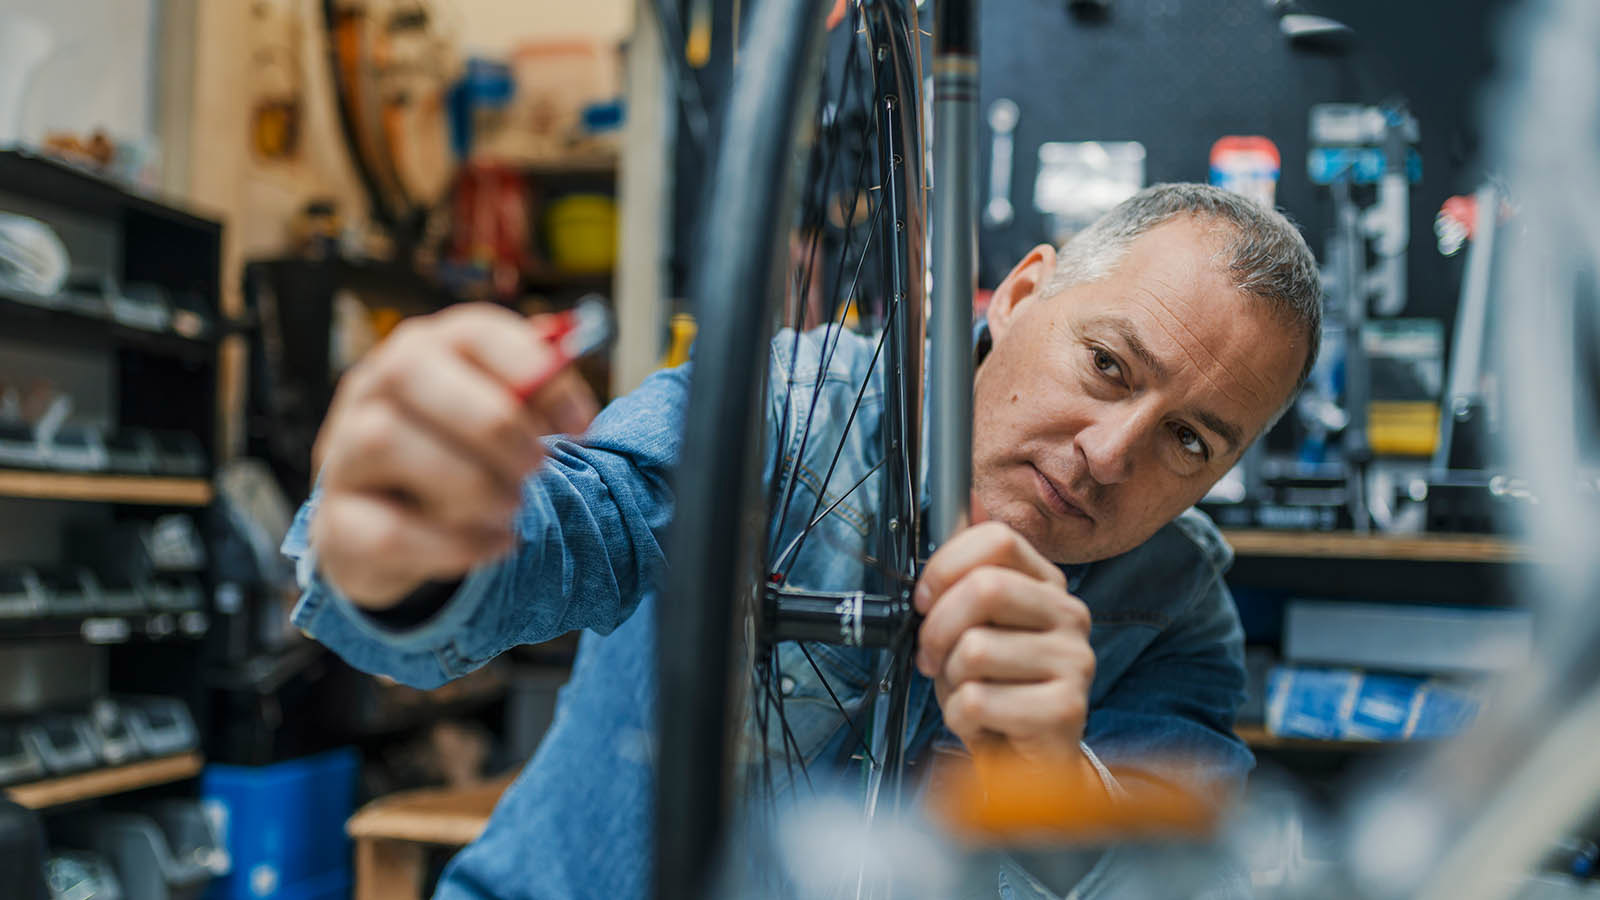 A man repairing a bicycle.